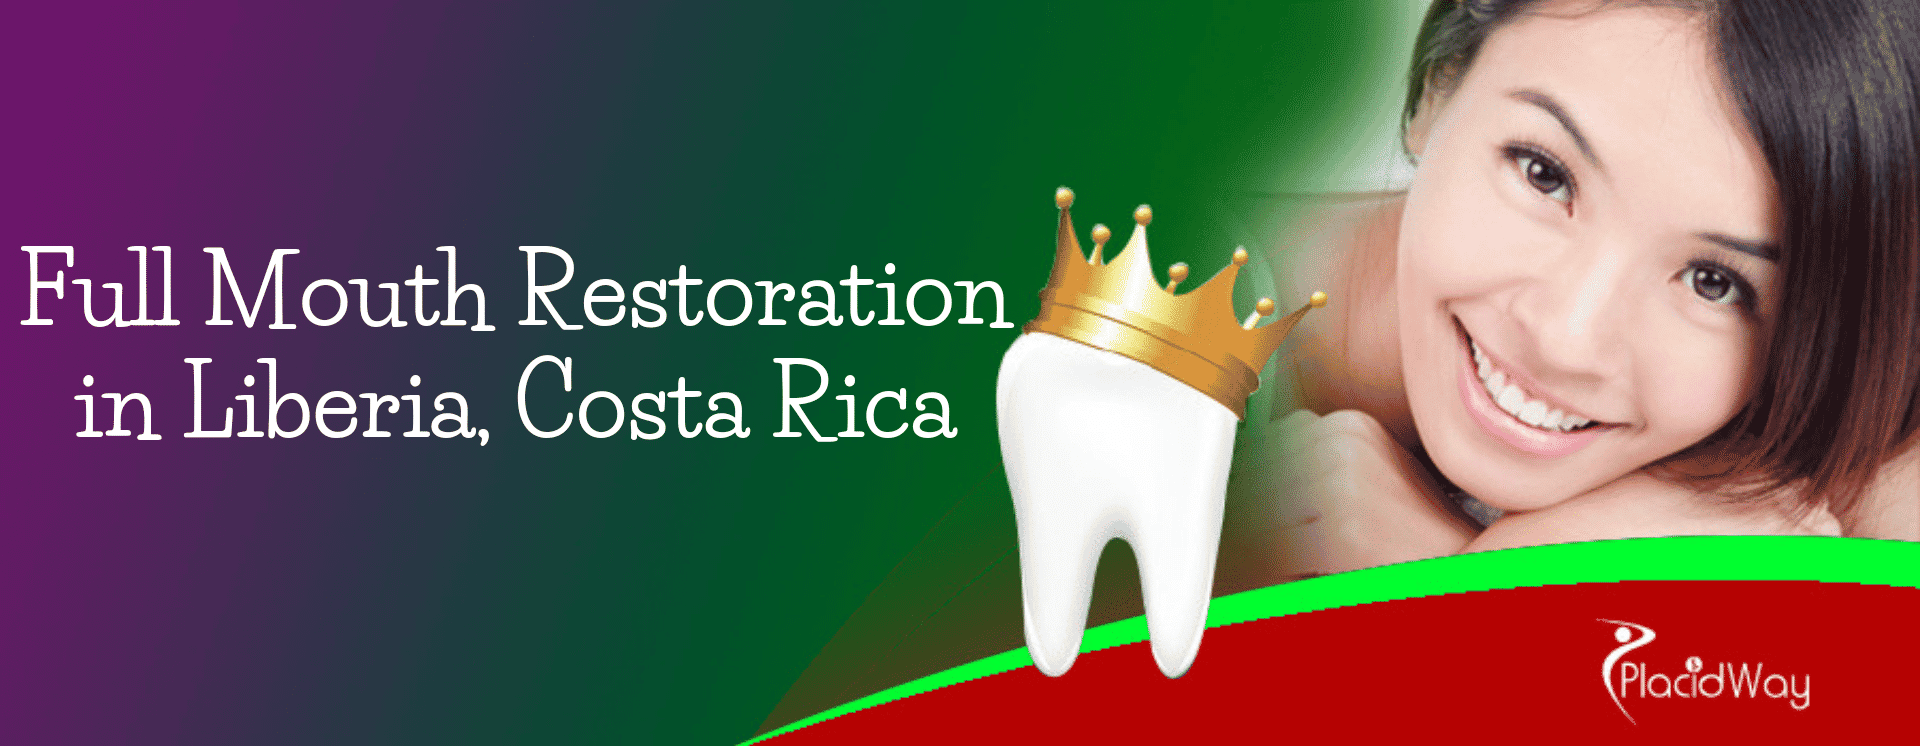 Full Mouth Restoration in Liberia, Costa Rica